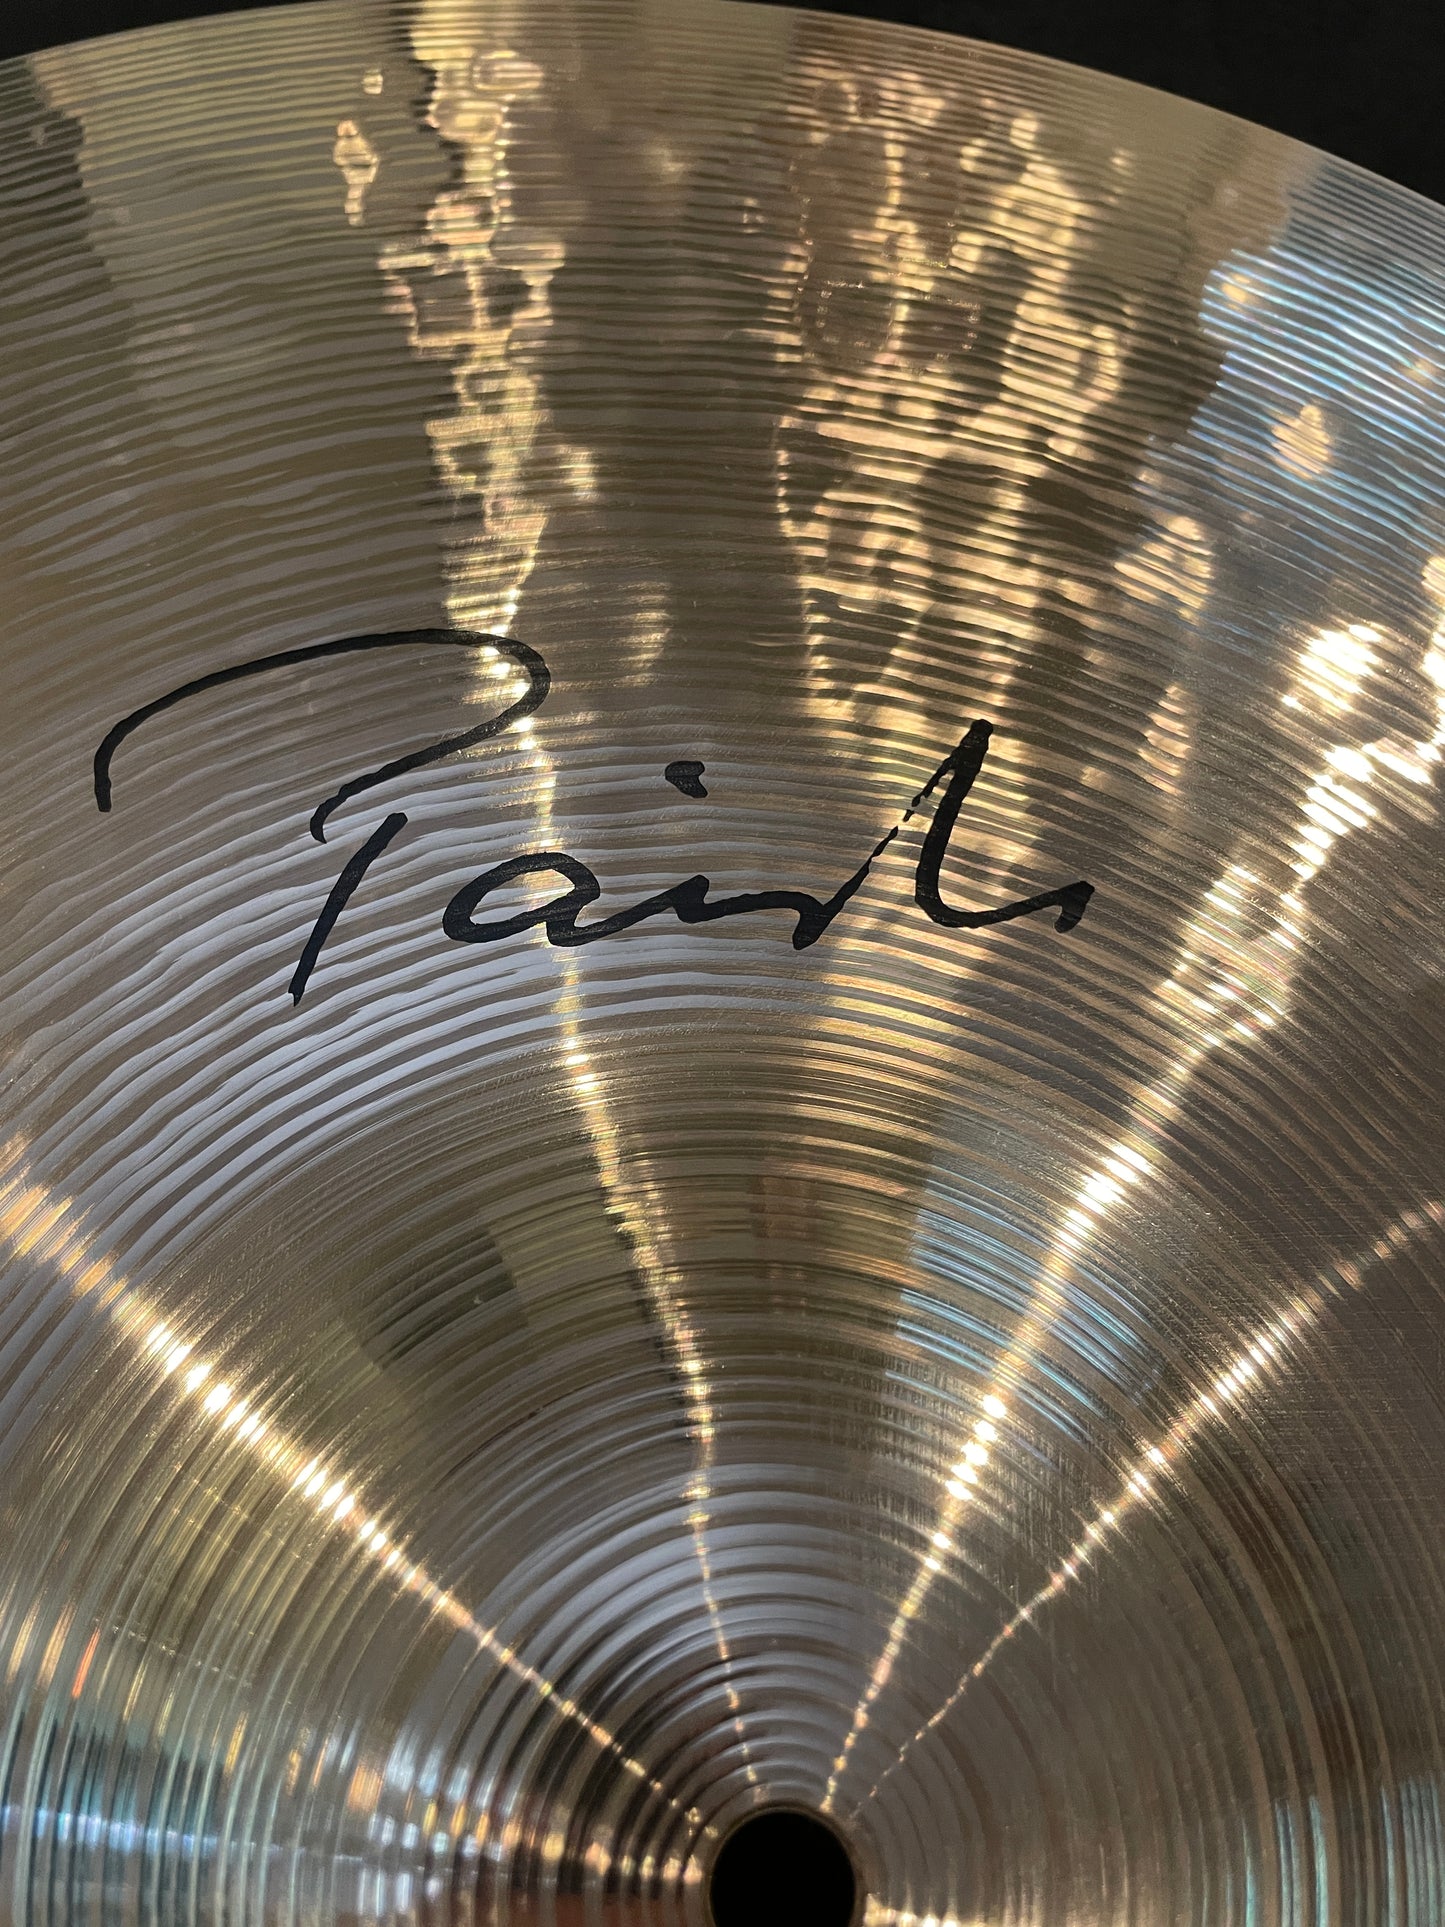 22" Paiste Signature Power Ride Cymbal 3884g